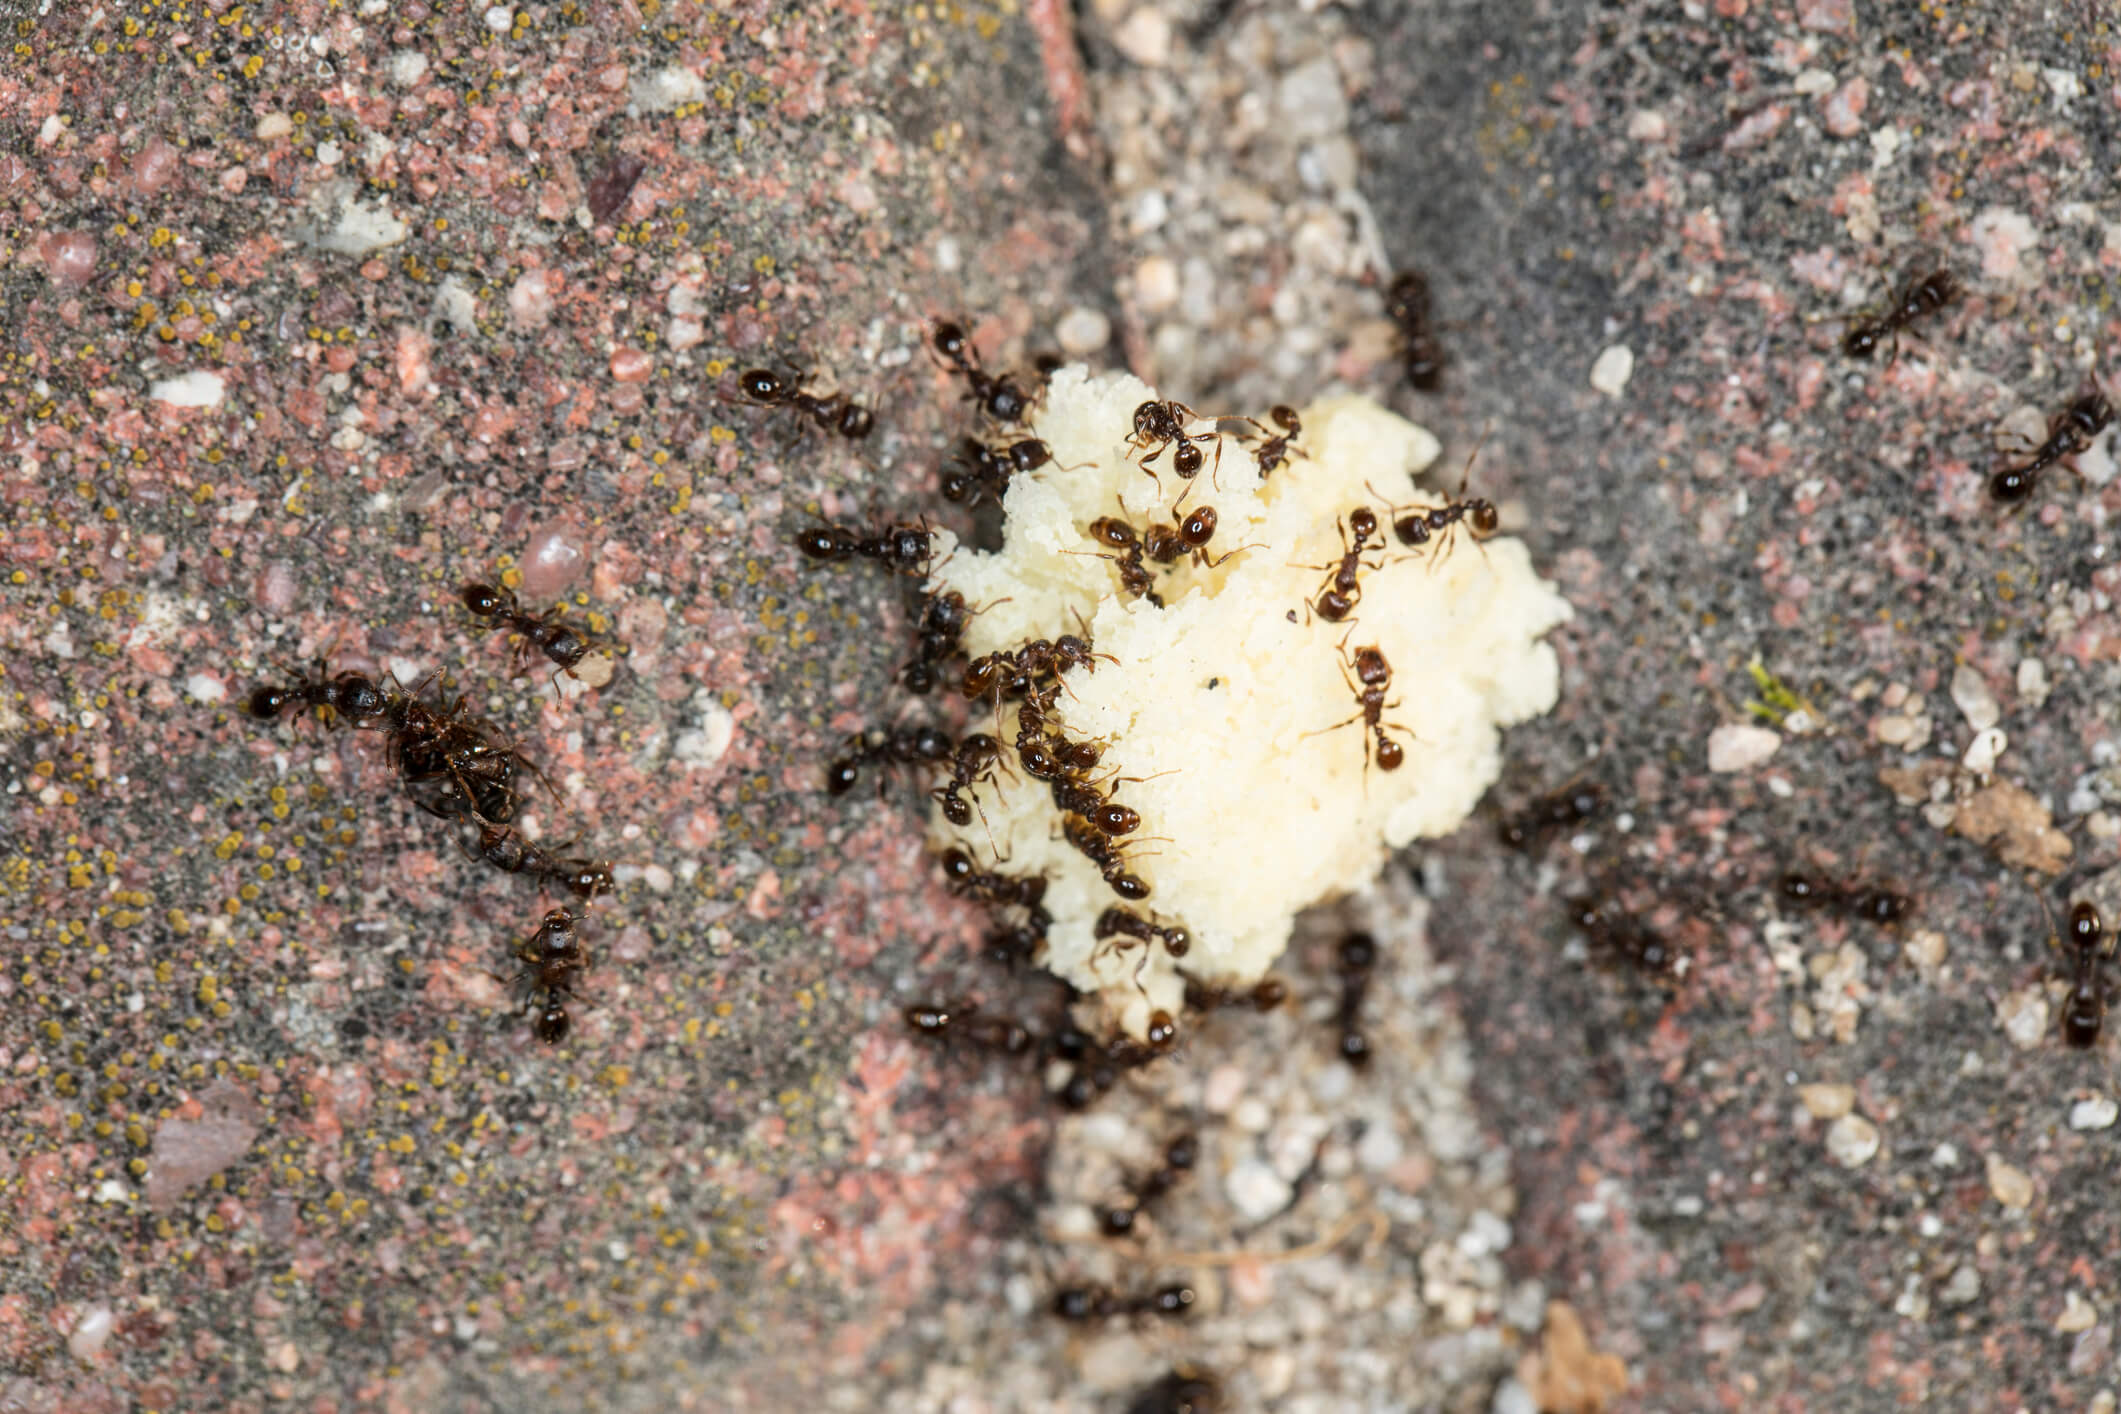 Ants eating food crumbs on ground.